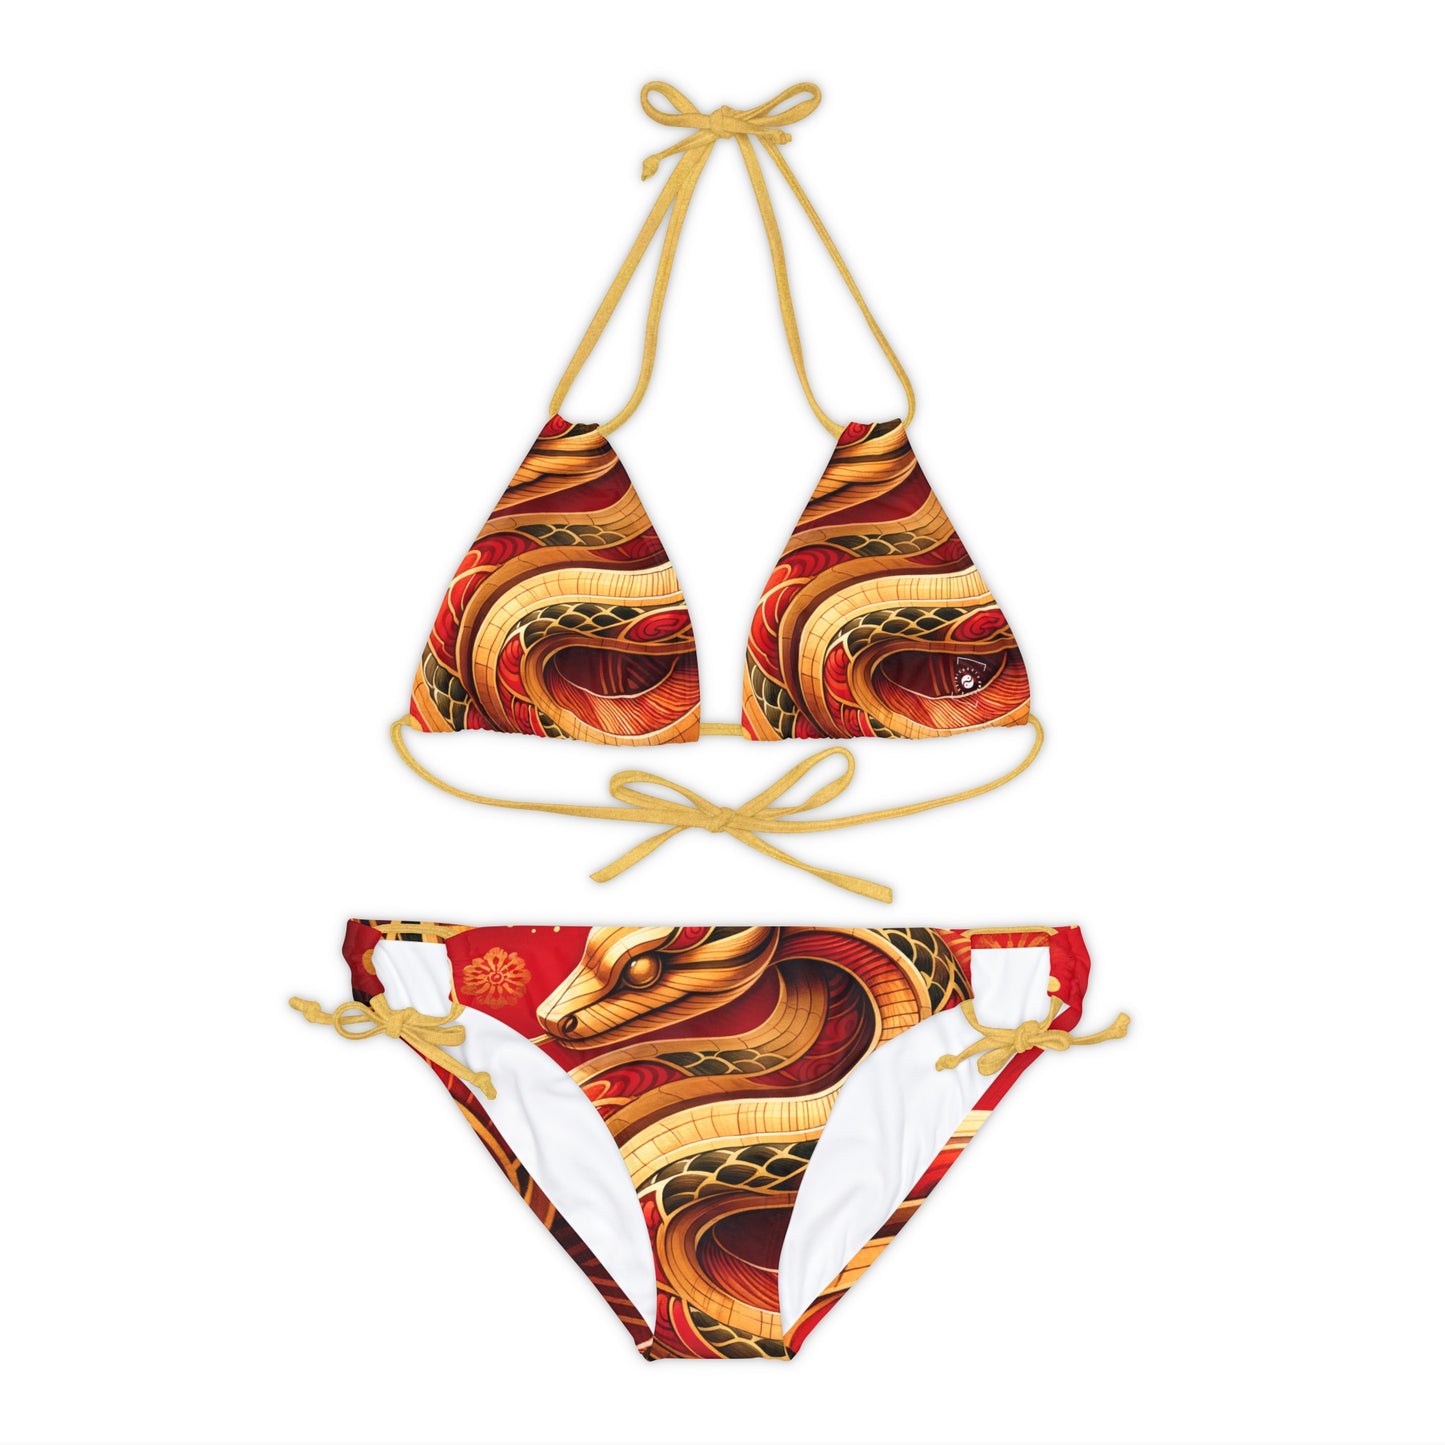 "Crimson Serenity: The Golden Snake" - Lace-up Bikini Set